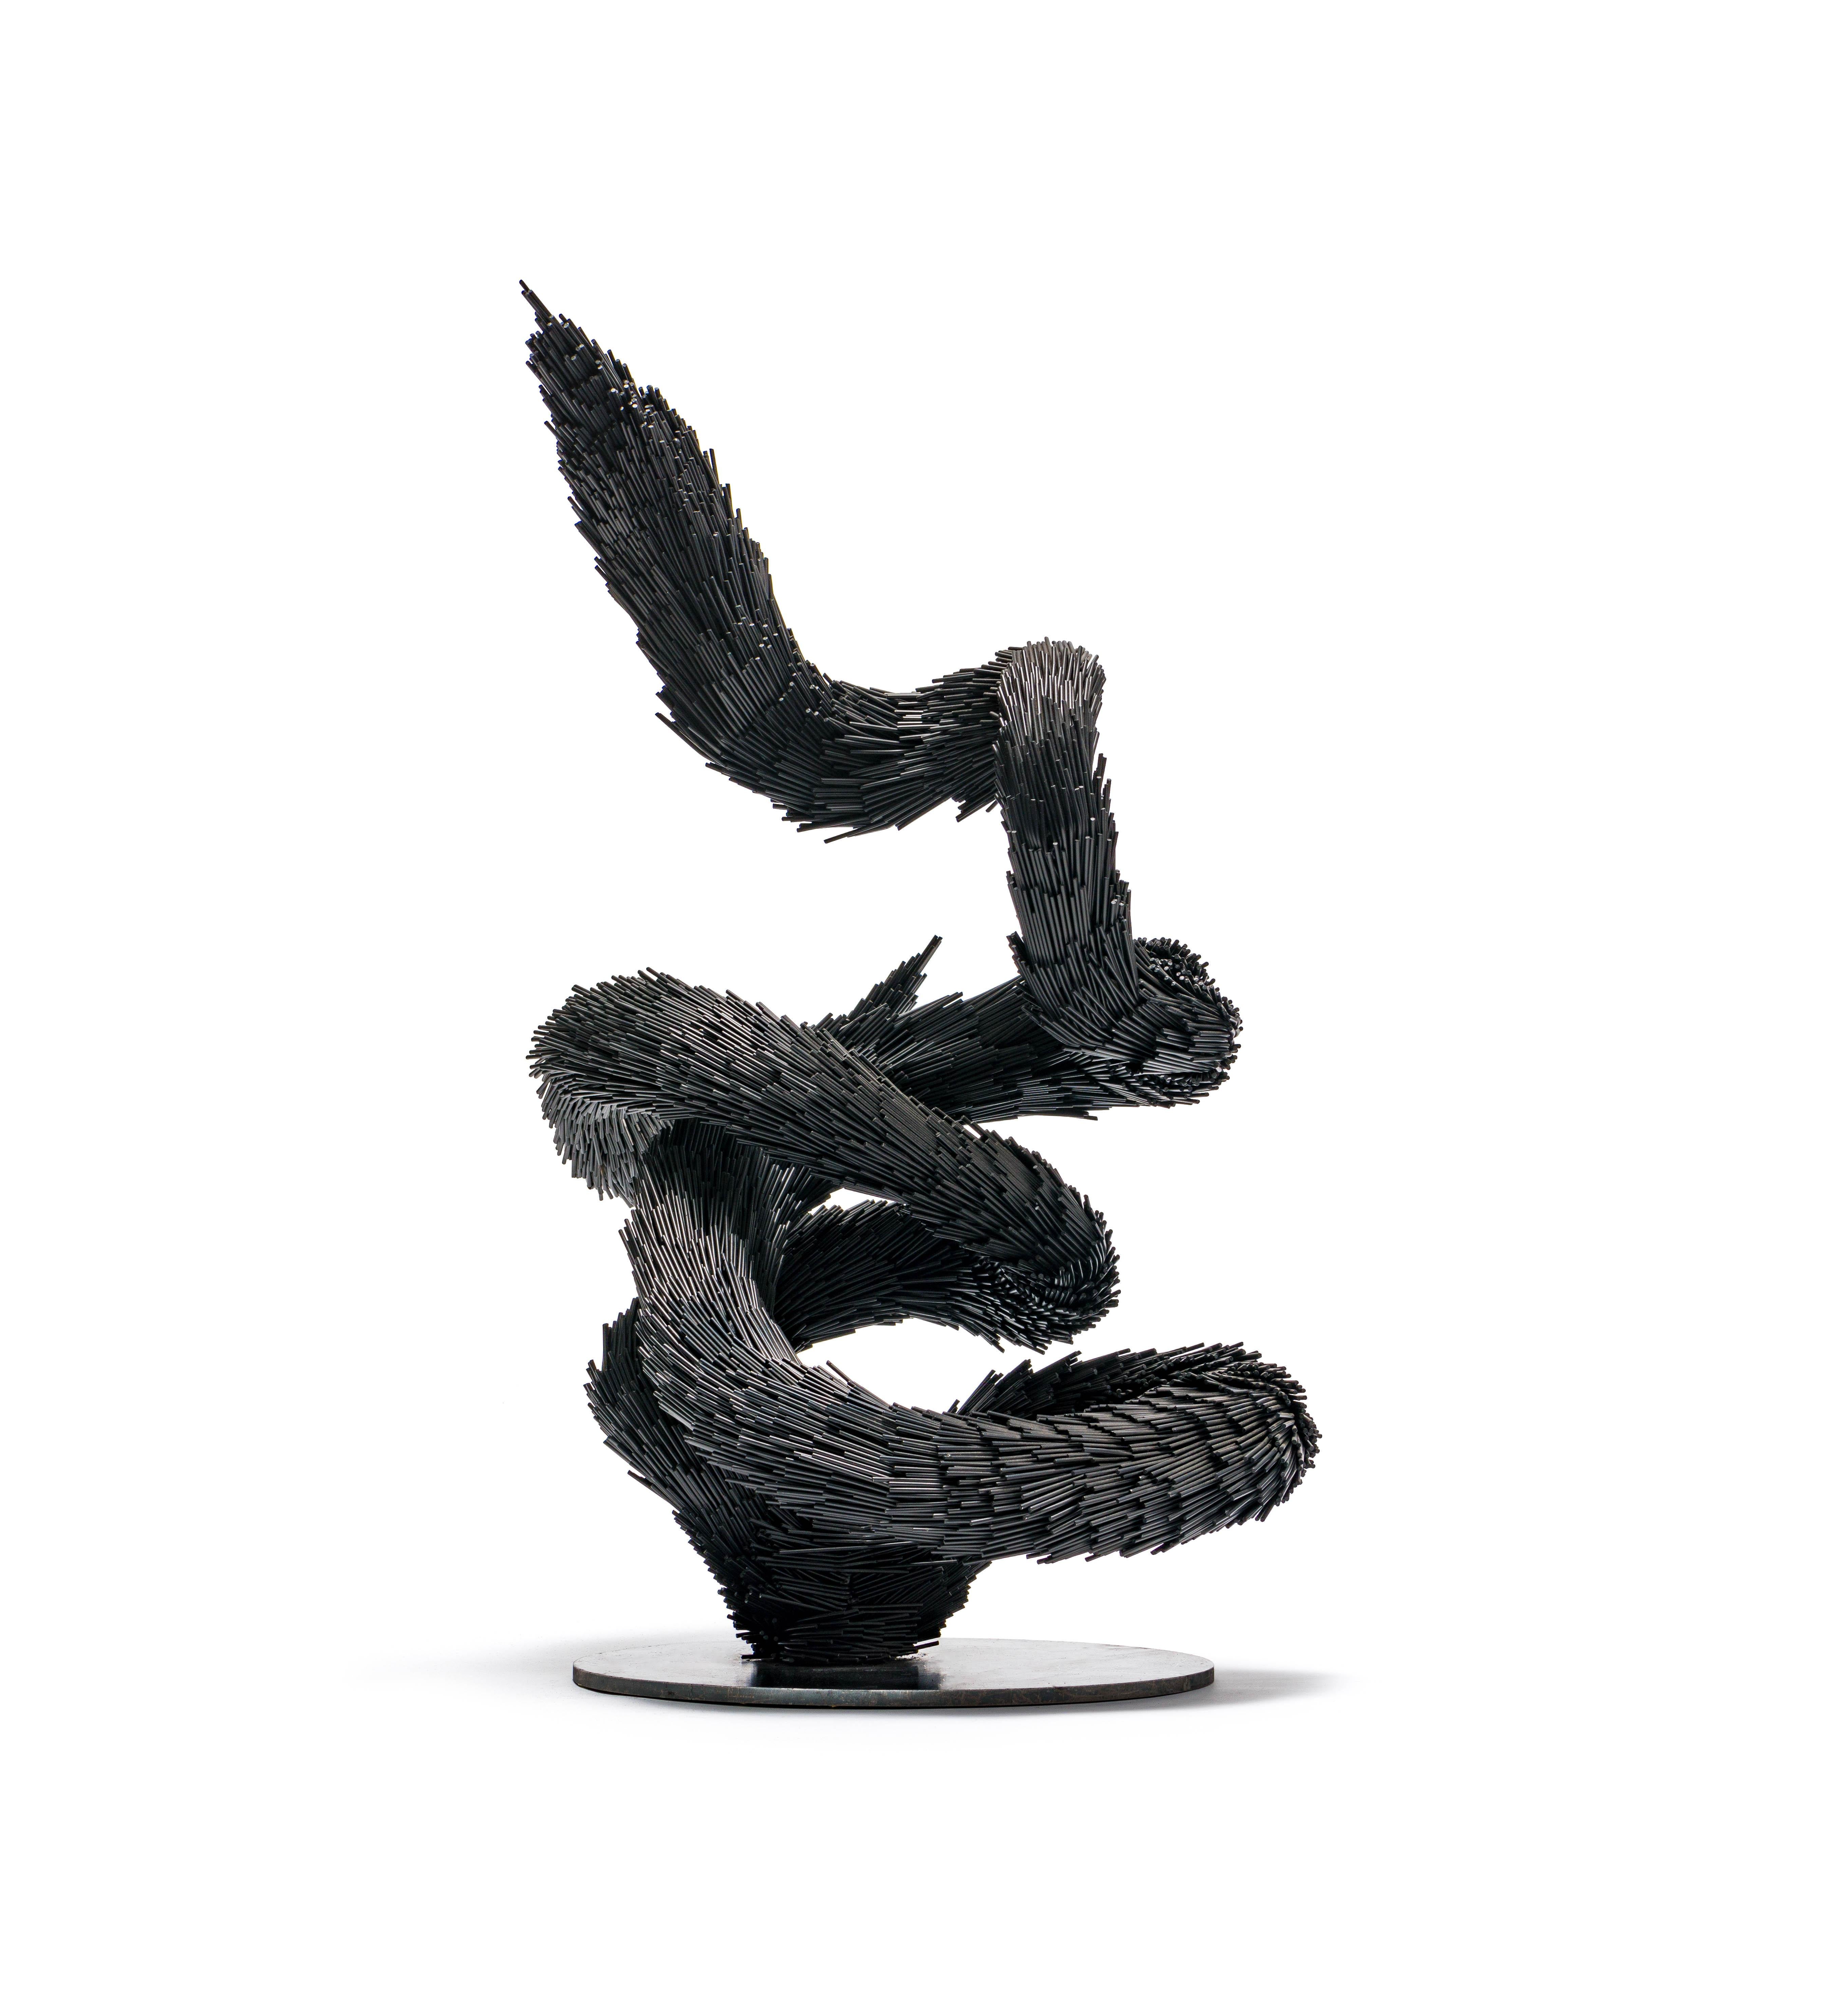 Jake Michael Singer Figurative Sculpture - "untitled" sculpture, Steel contemporary snake sculpture in black